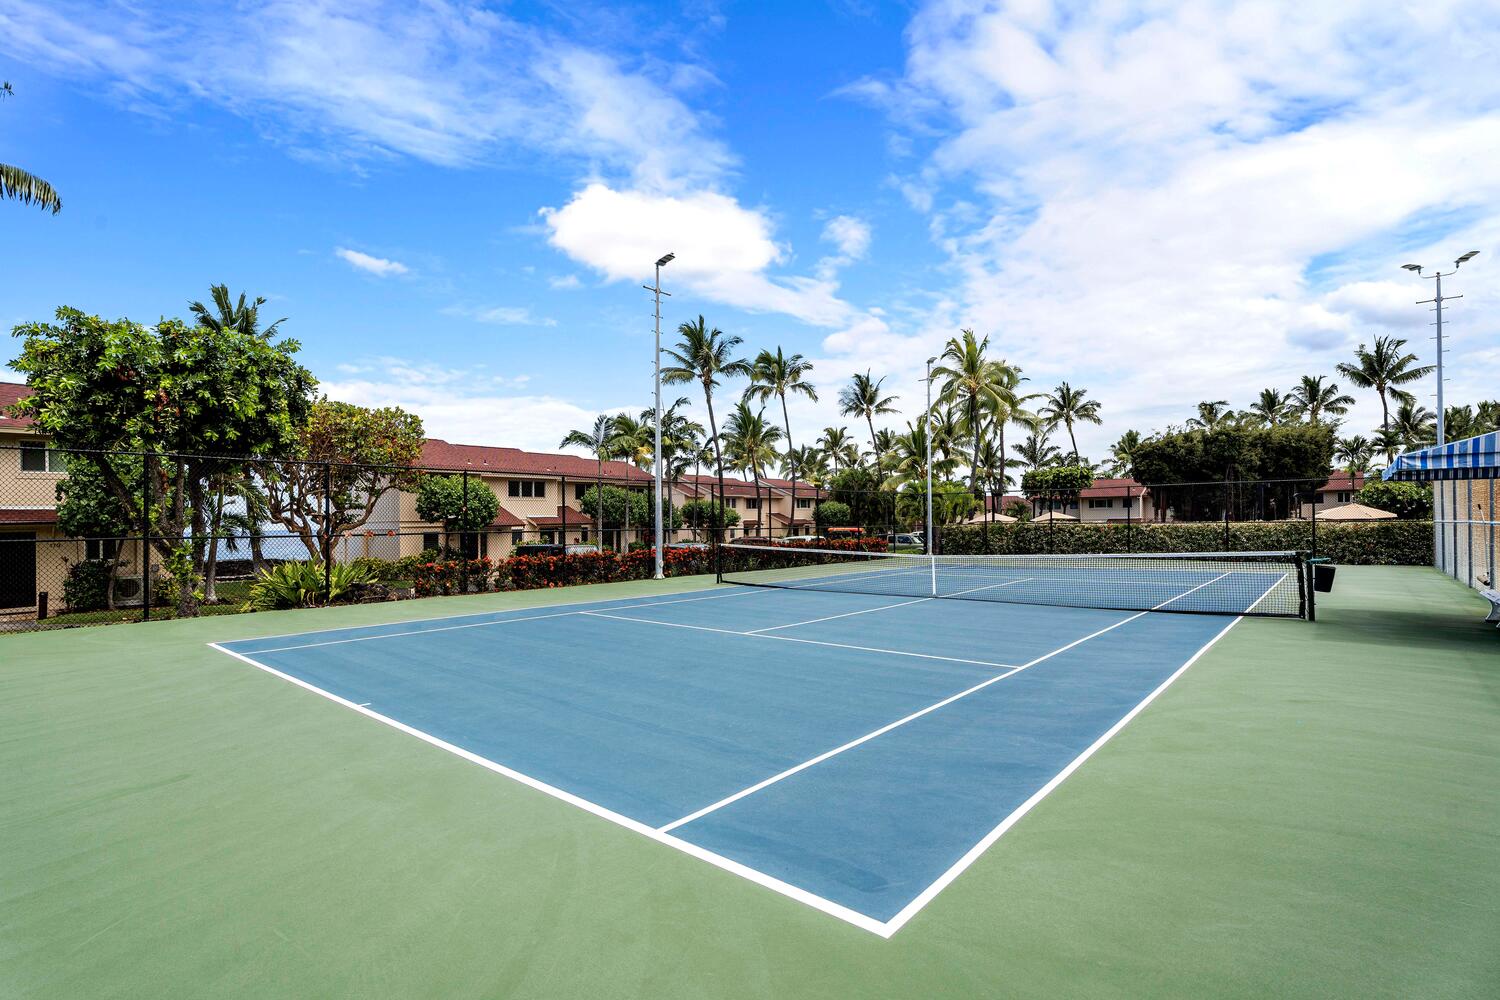 Kailua Kona Vacation Rentals, Keauhou Kona Surf & Racquet 1104 - Tennis court 3